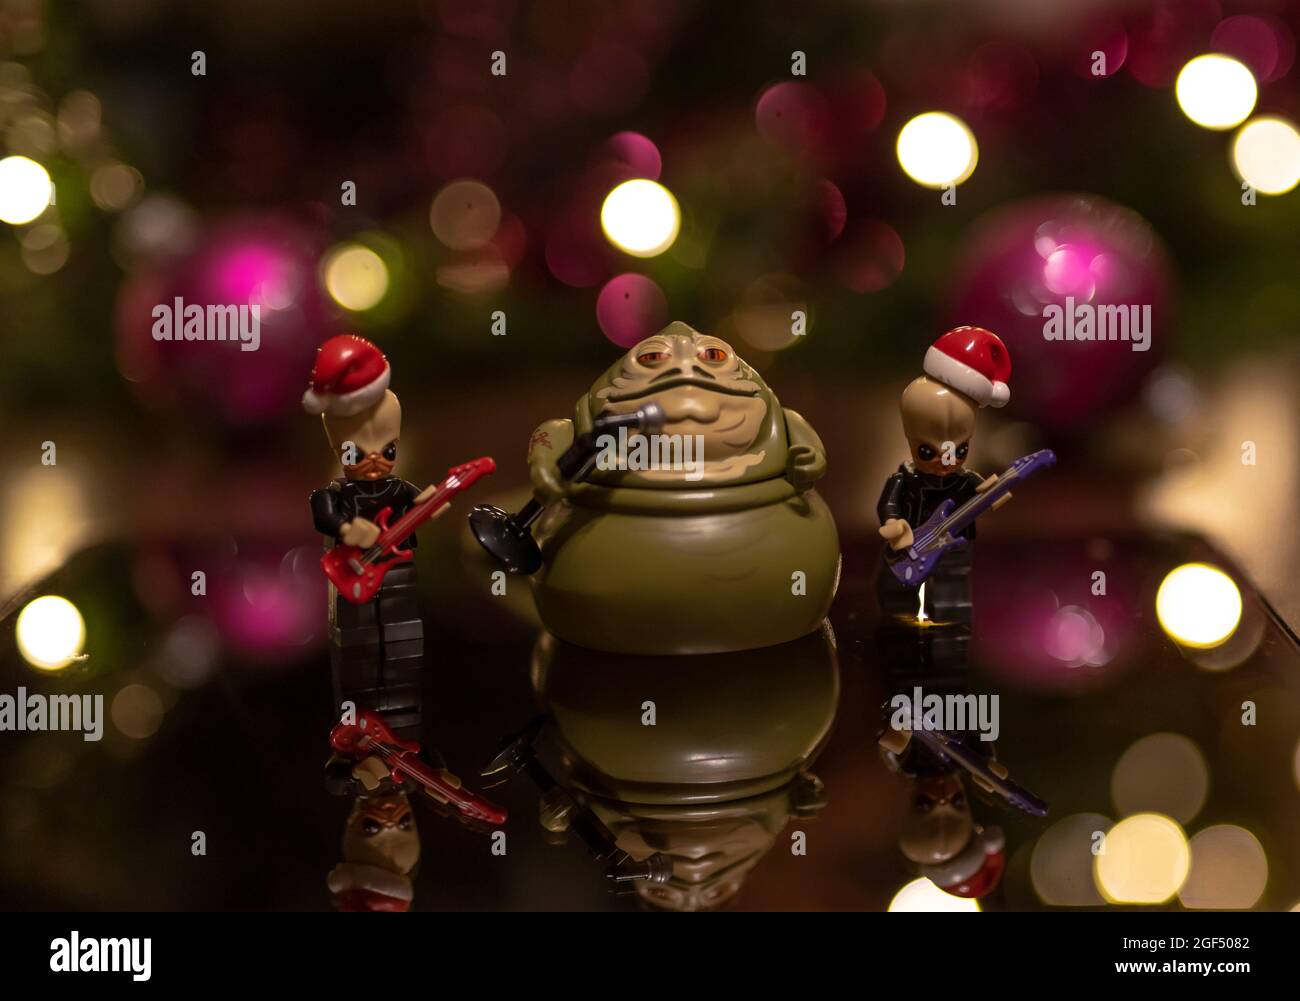 Lego star wars minifigures singing christmas song Stock Photo